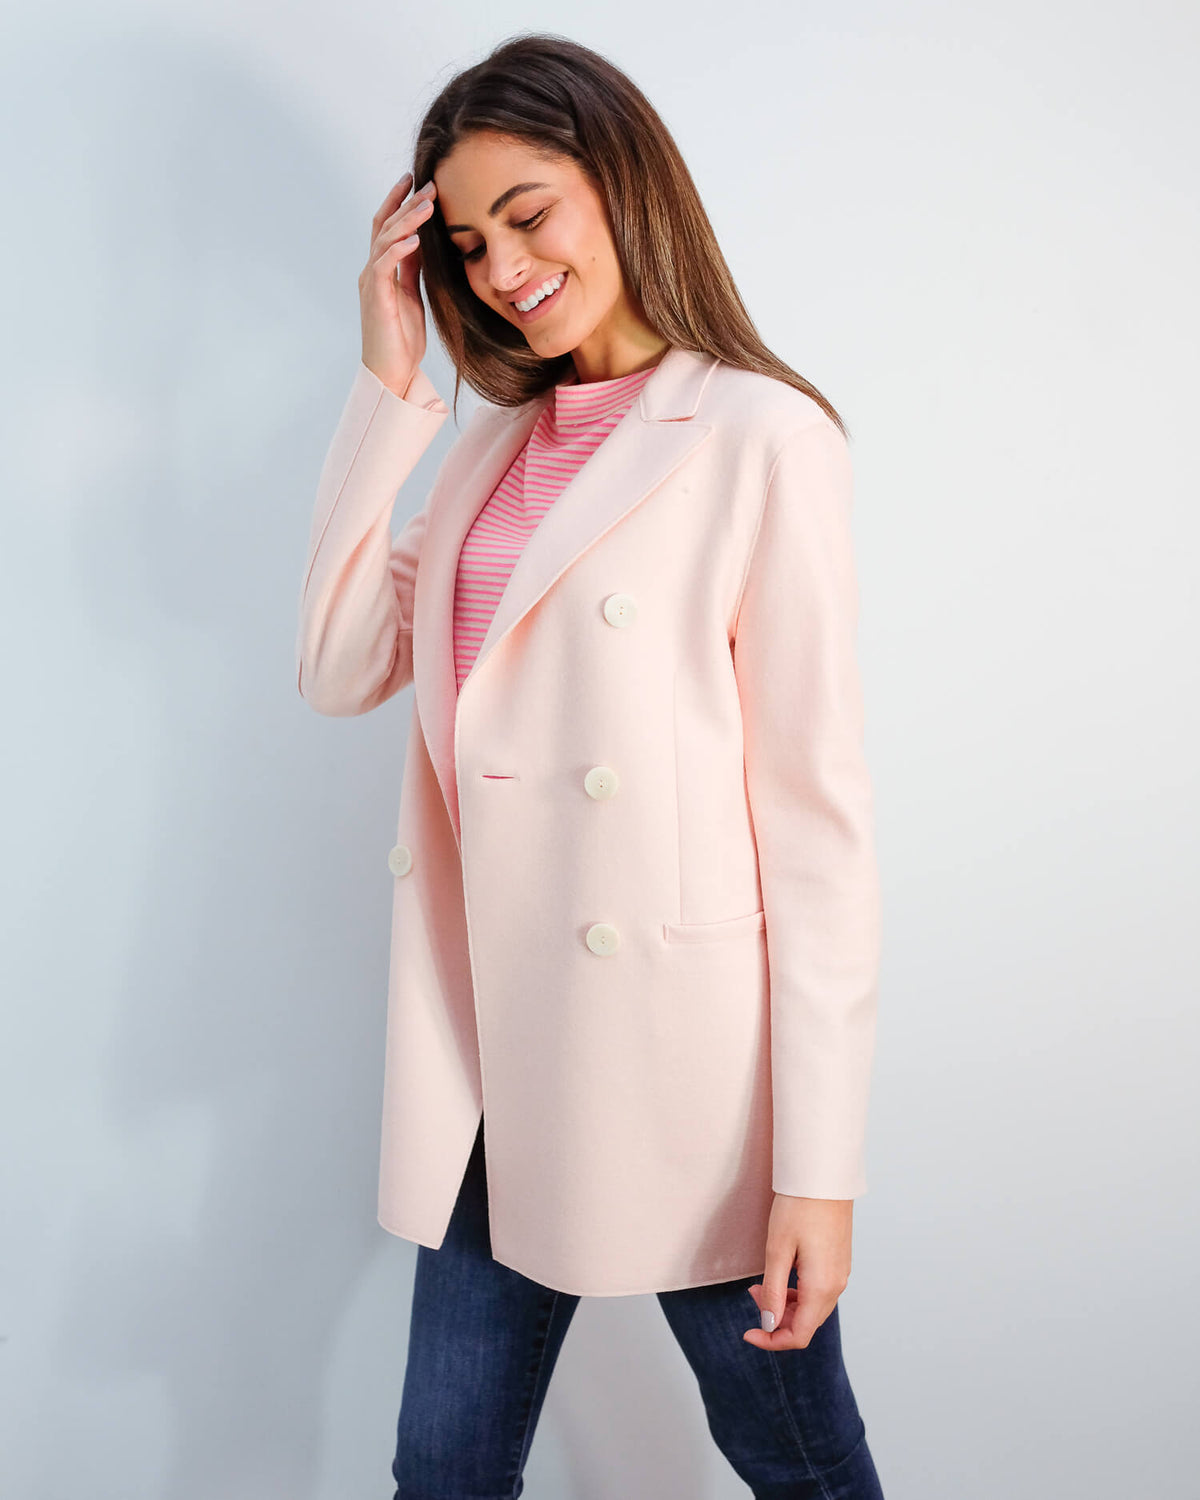 HWL Pressed wool blazer in pastel pink